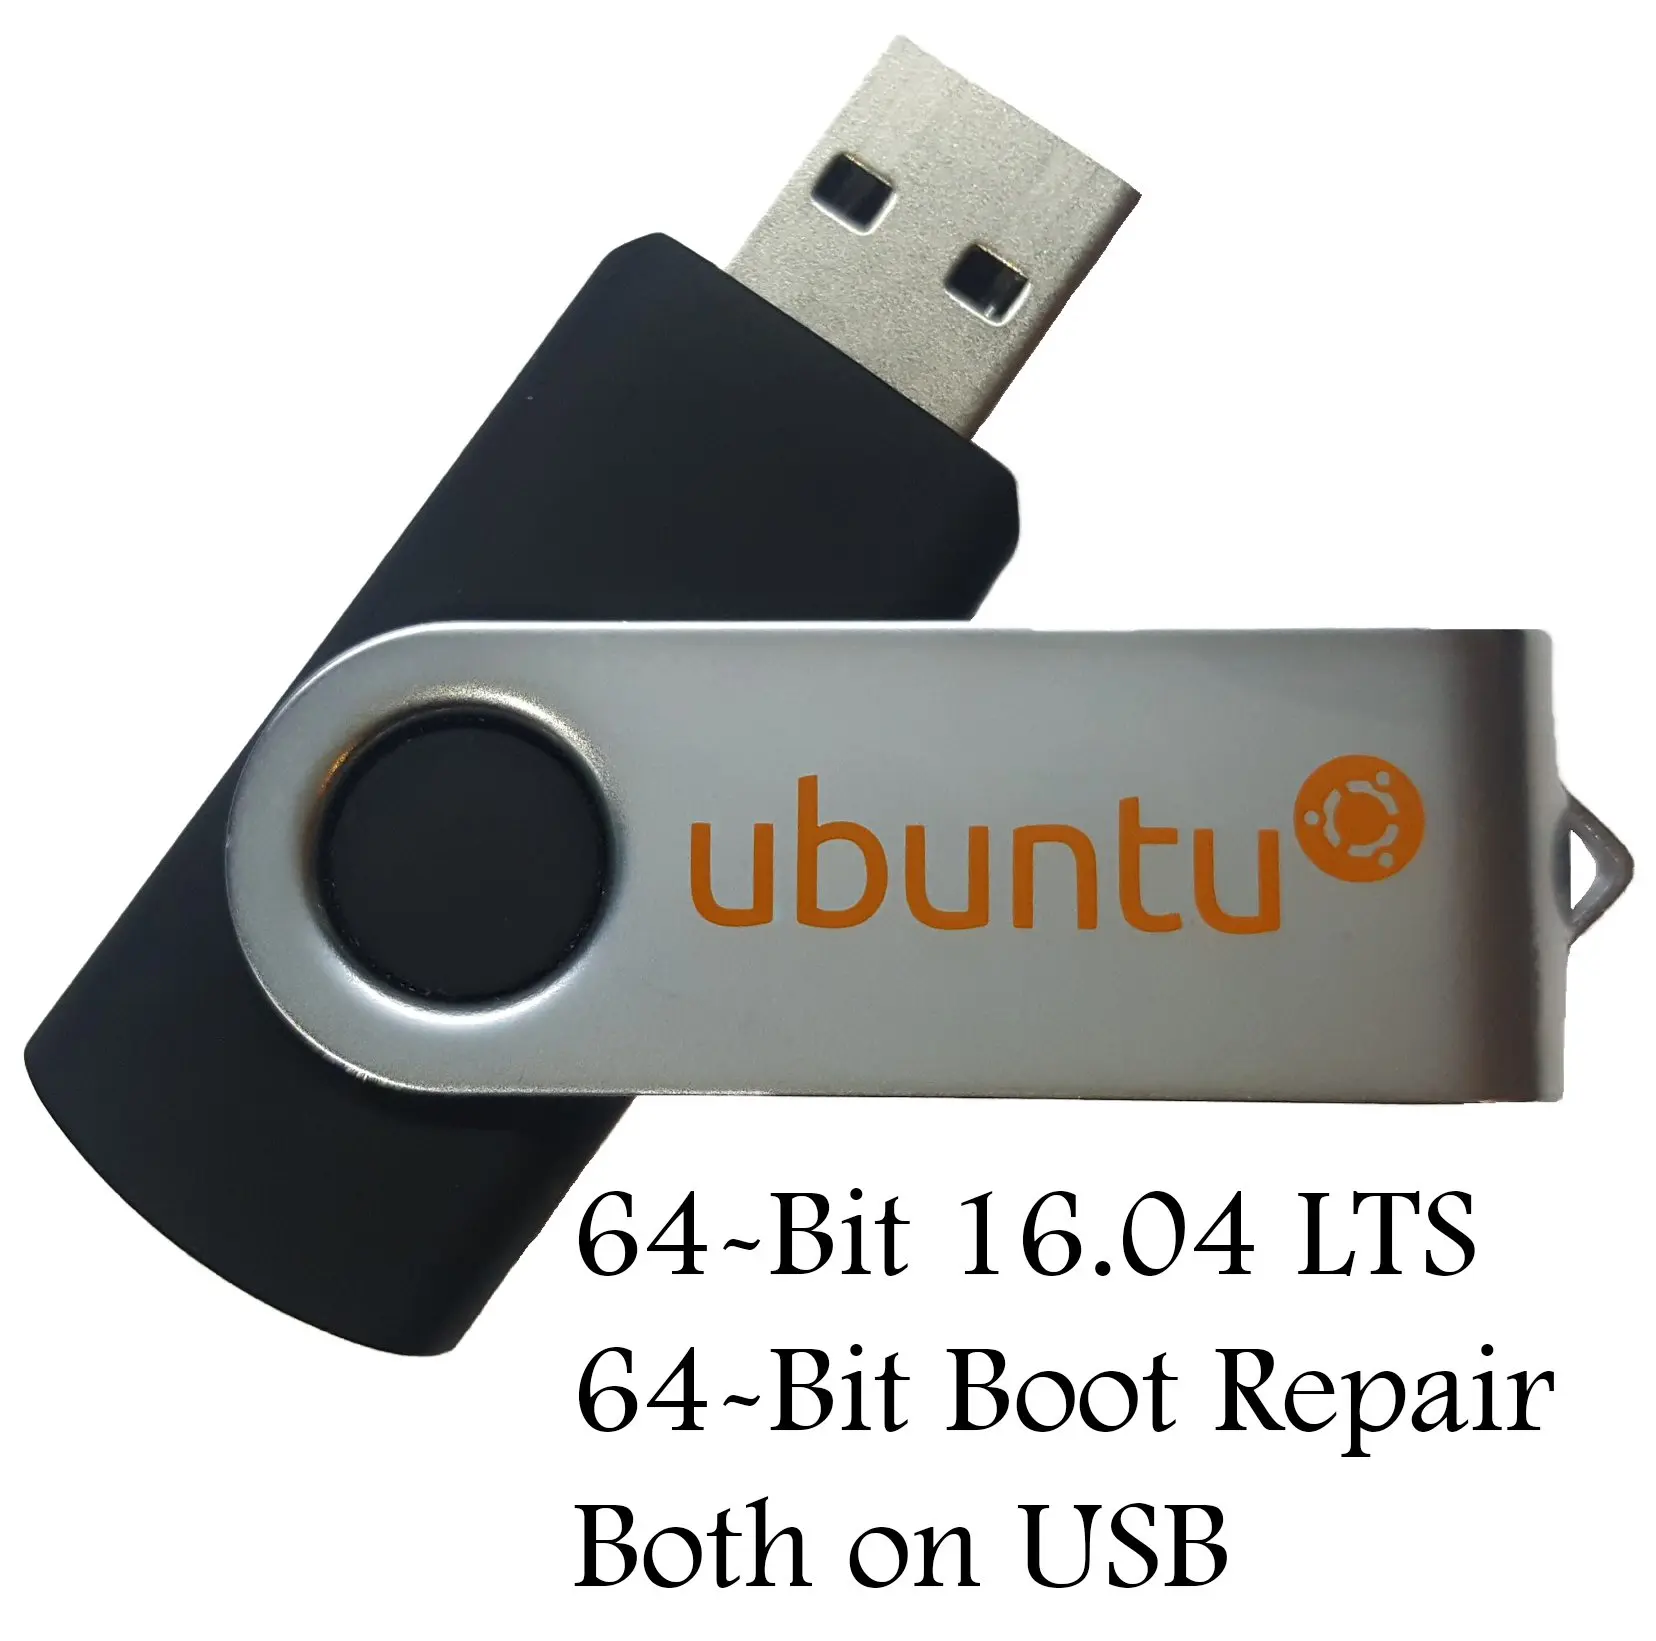 ubuntu 16.04 universal usb installer settings